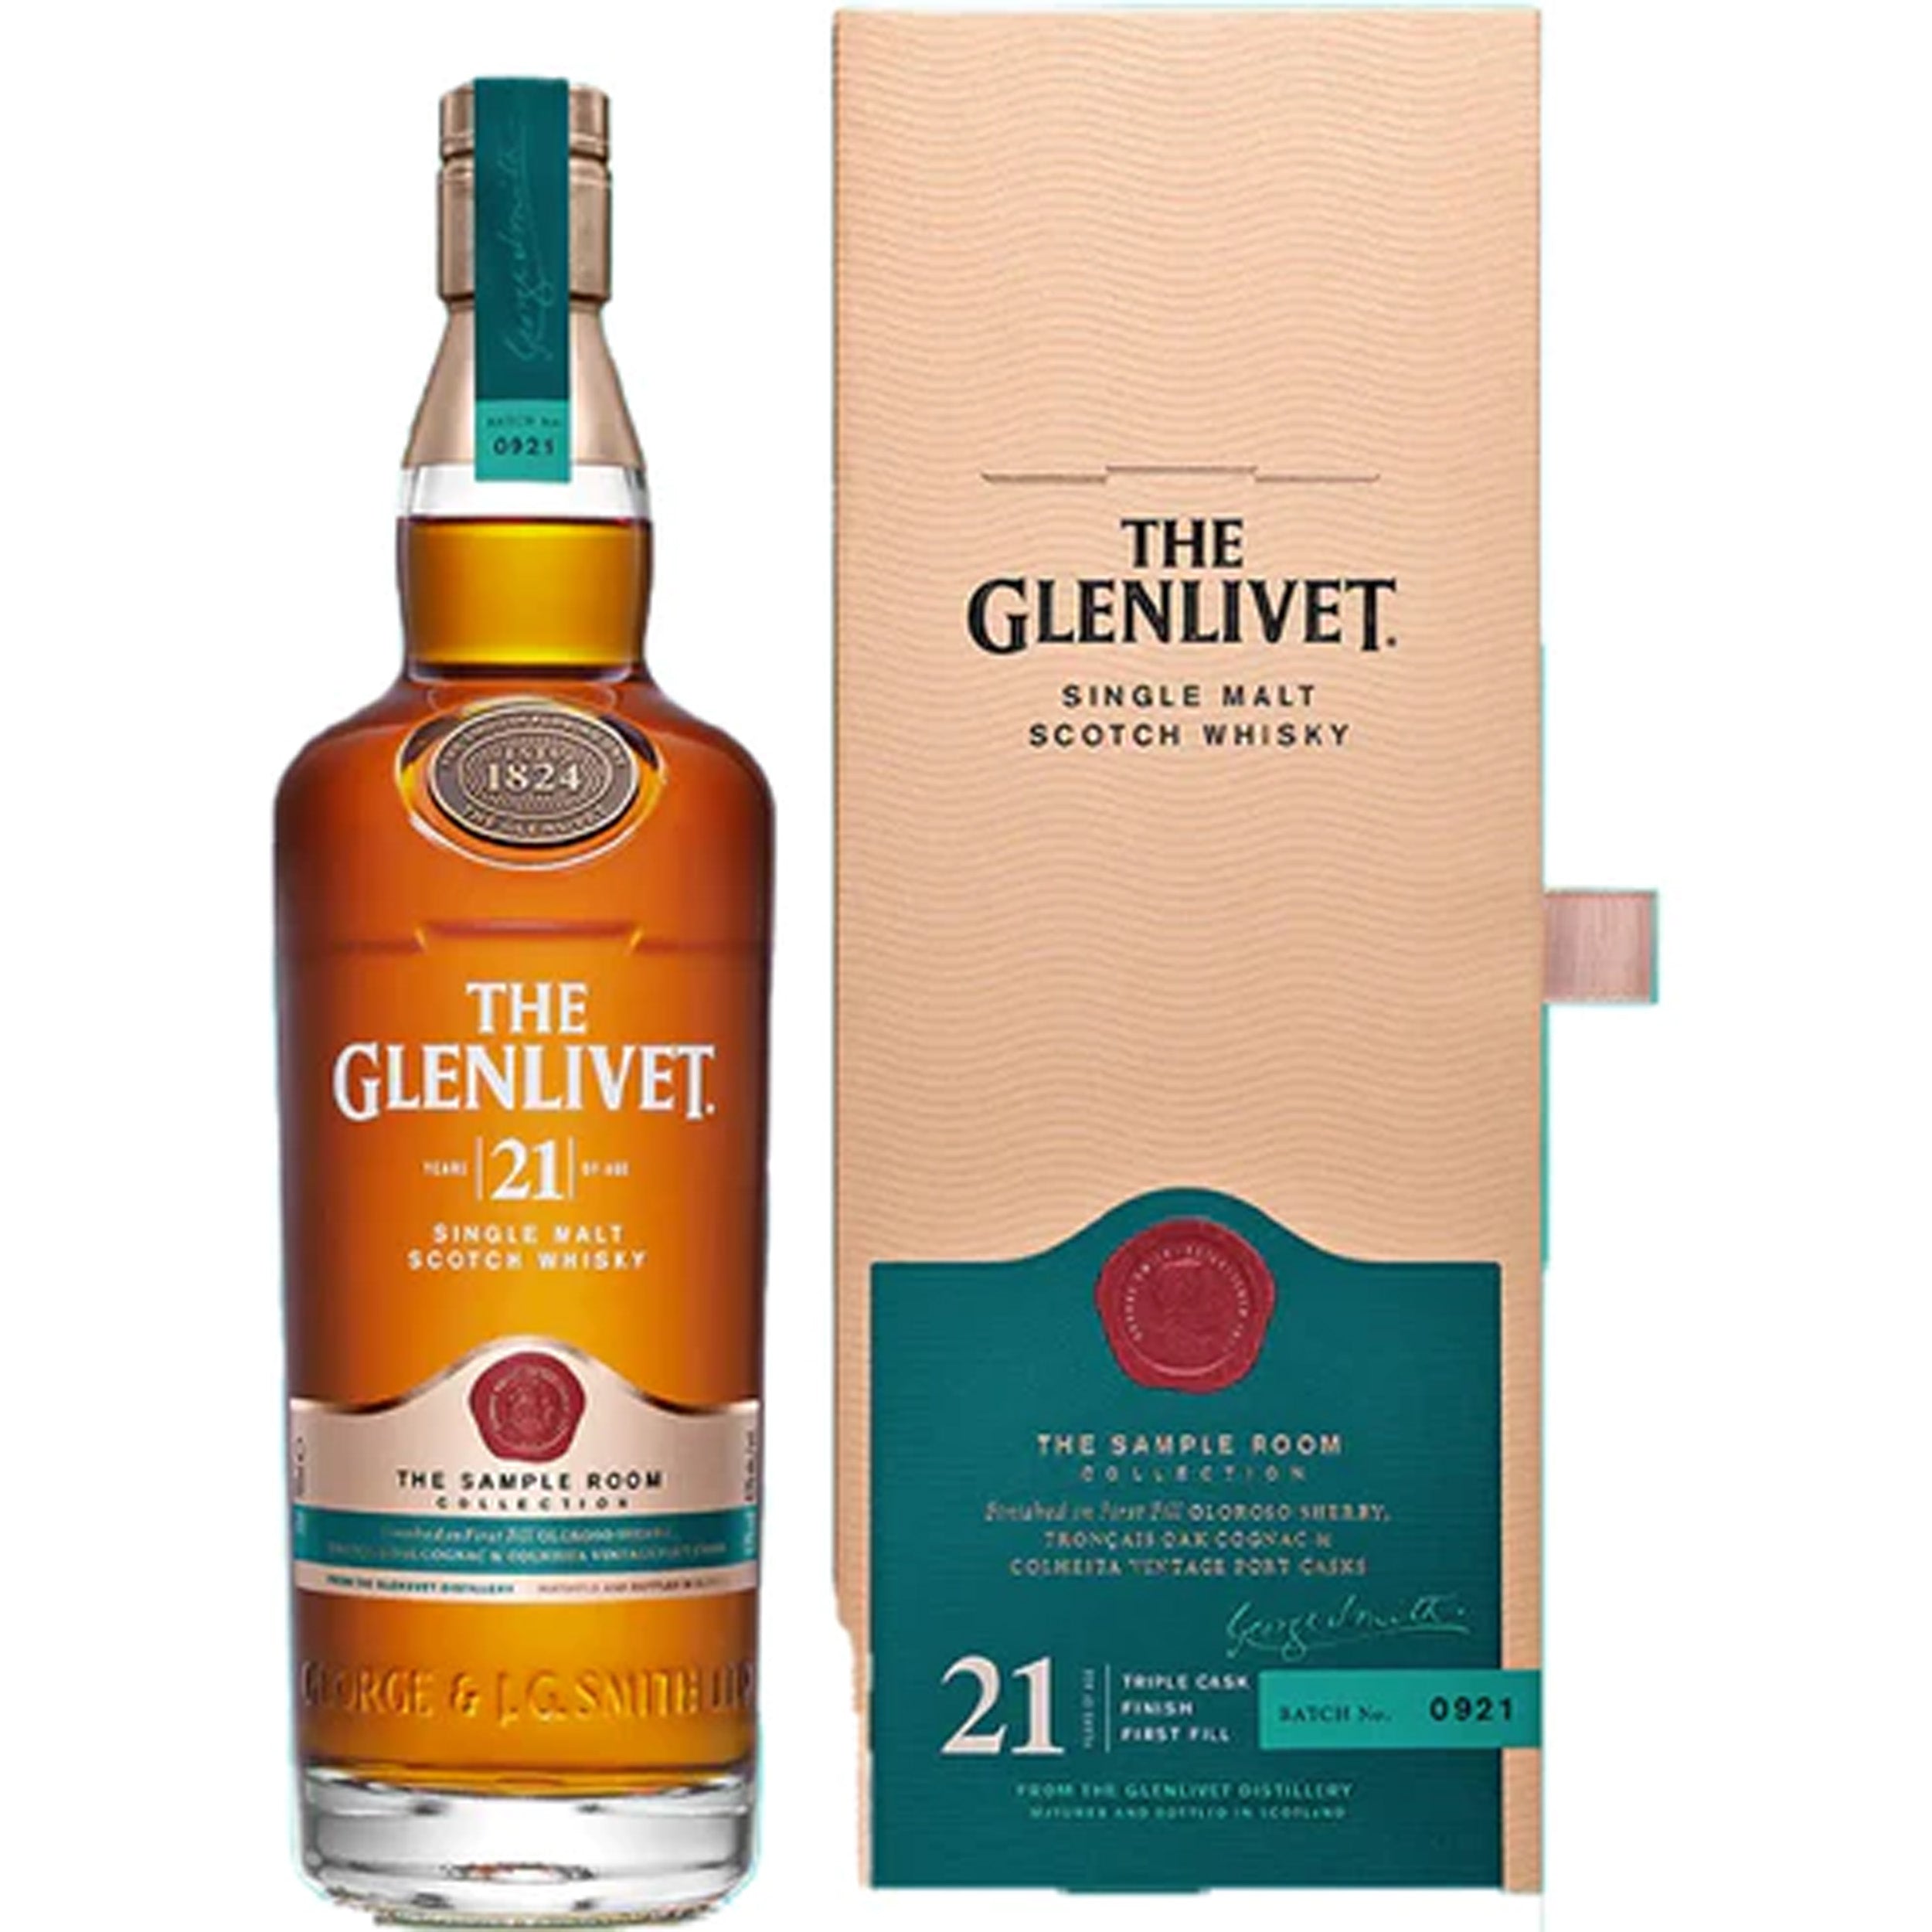 The Glenlivet 'Sample Room Collection' 21 Year Old Triple Cask Scotch Whisky